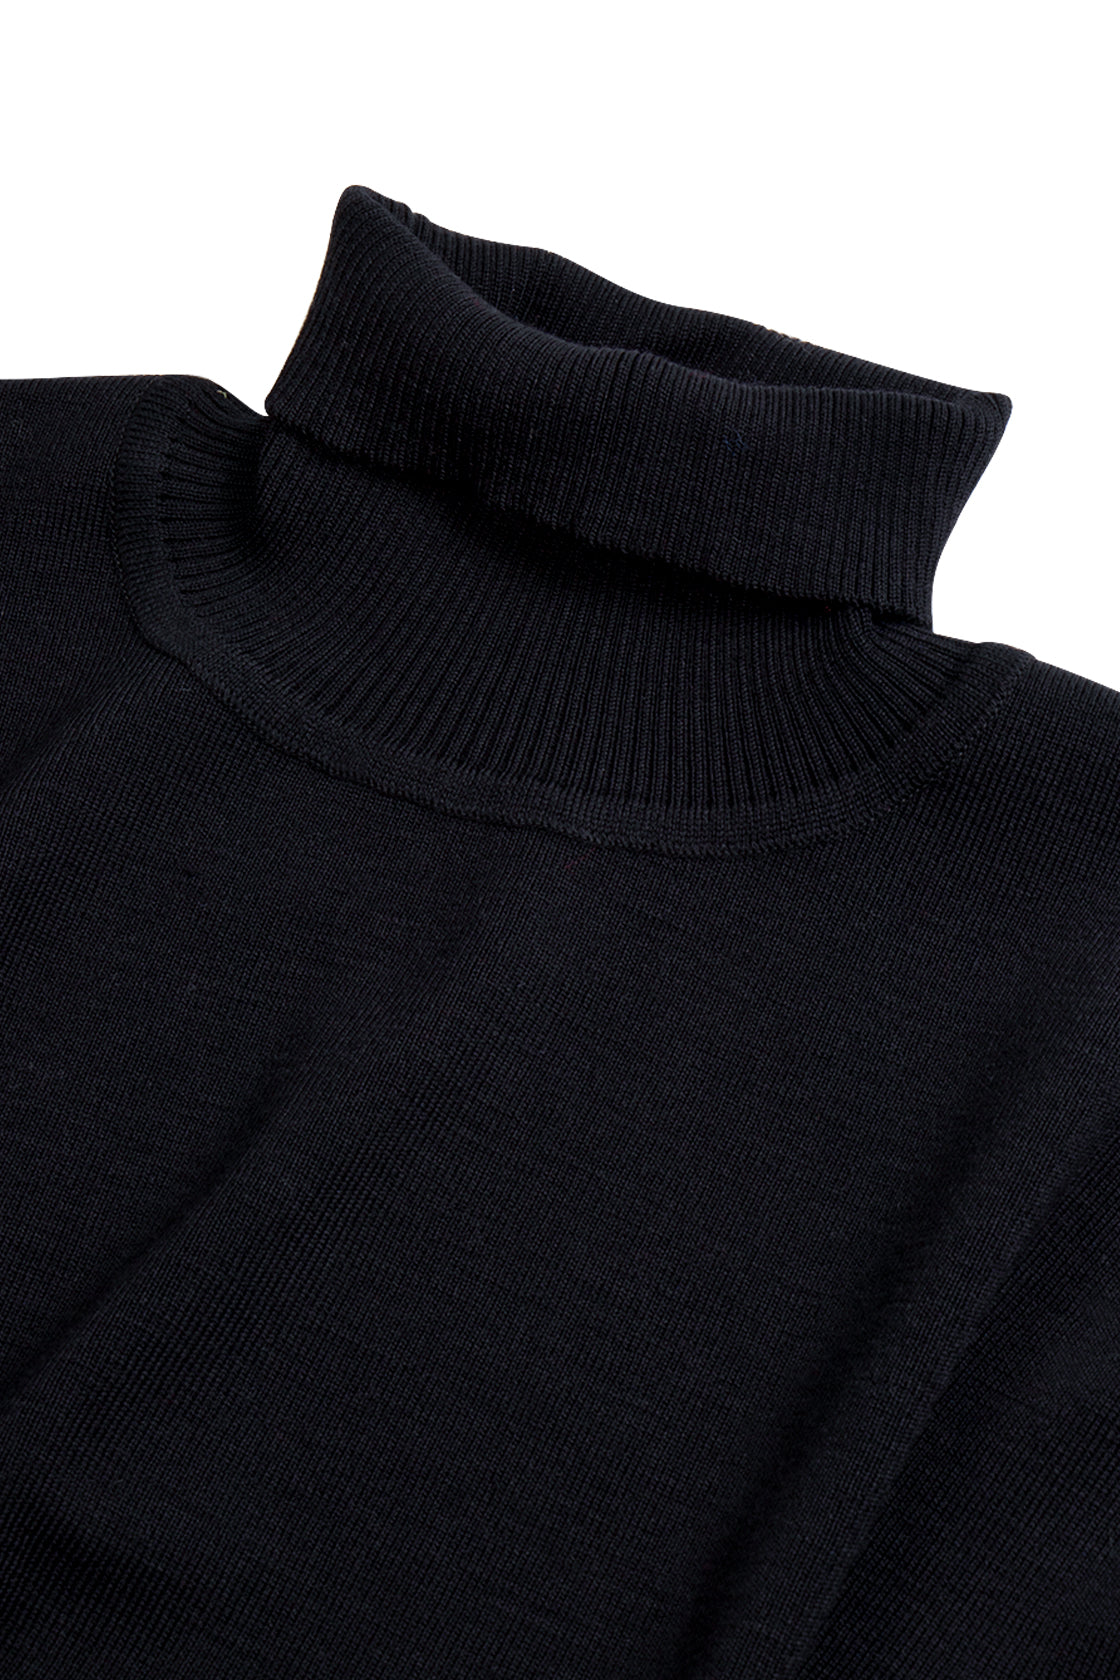 Routleys Franklin Roll Neck Sweater Black